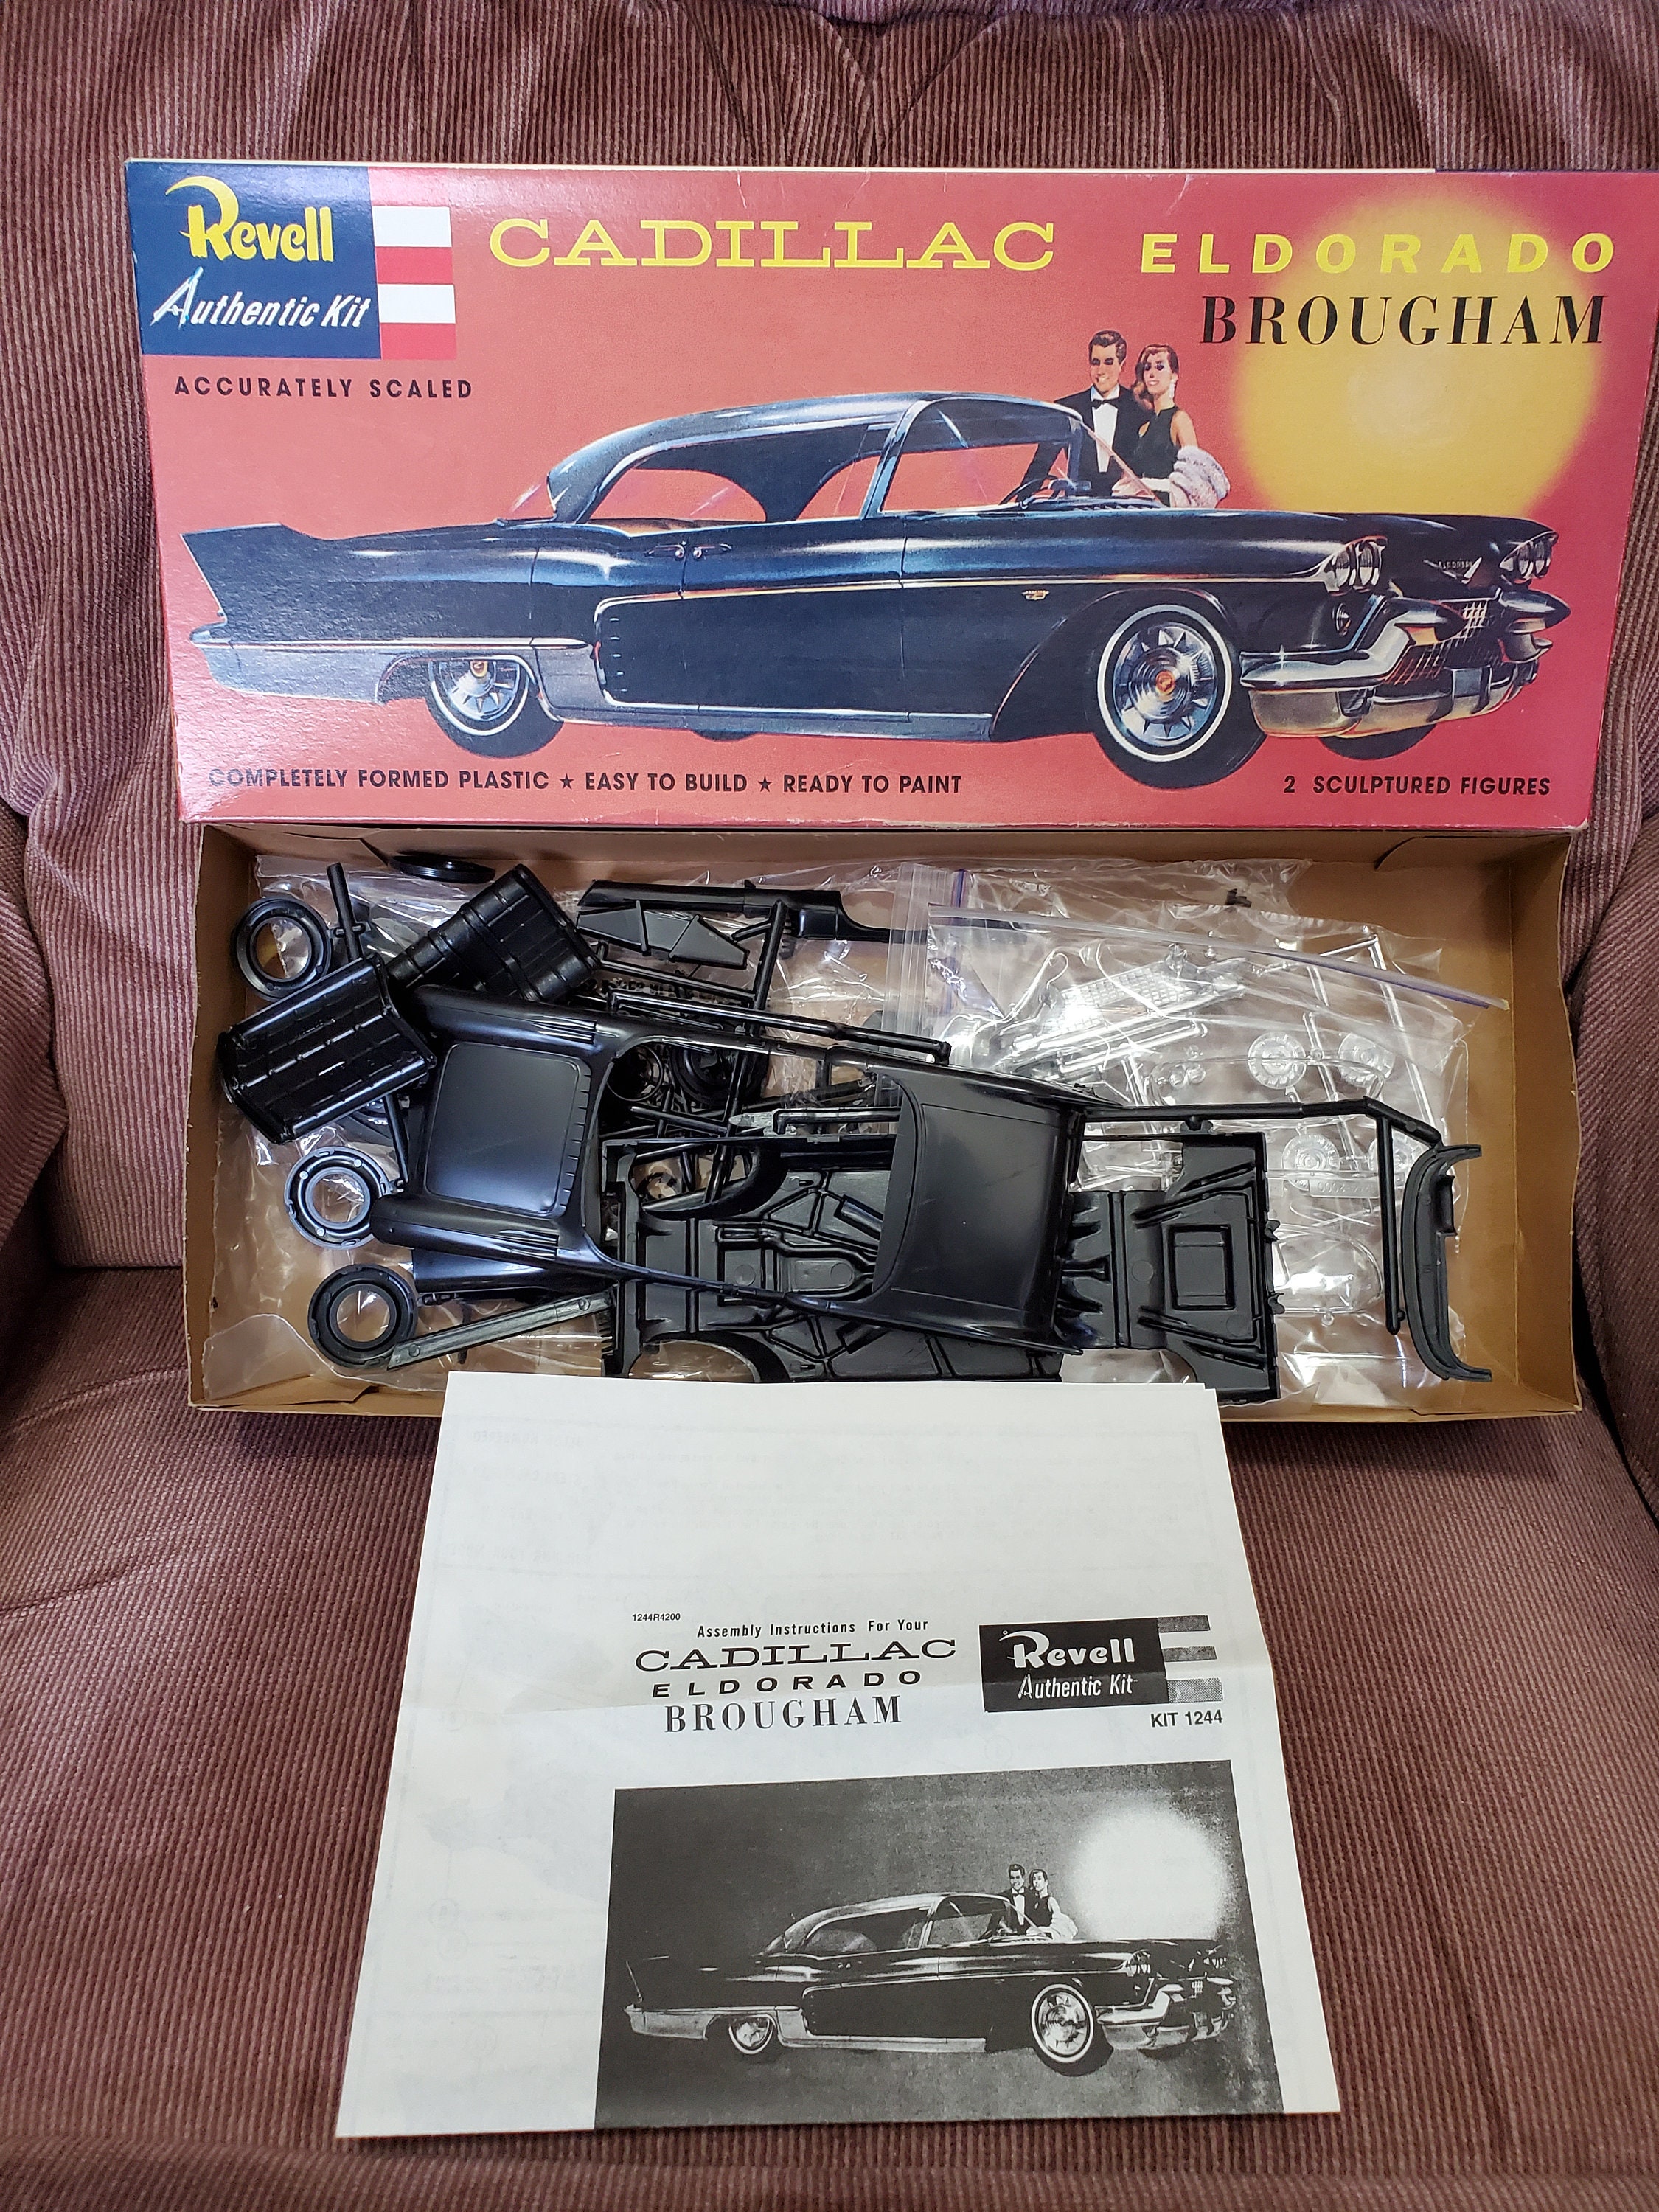 Revell model kit: Cadillac Eldorado Brougham - open box, kit 1244